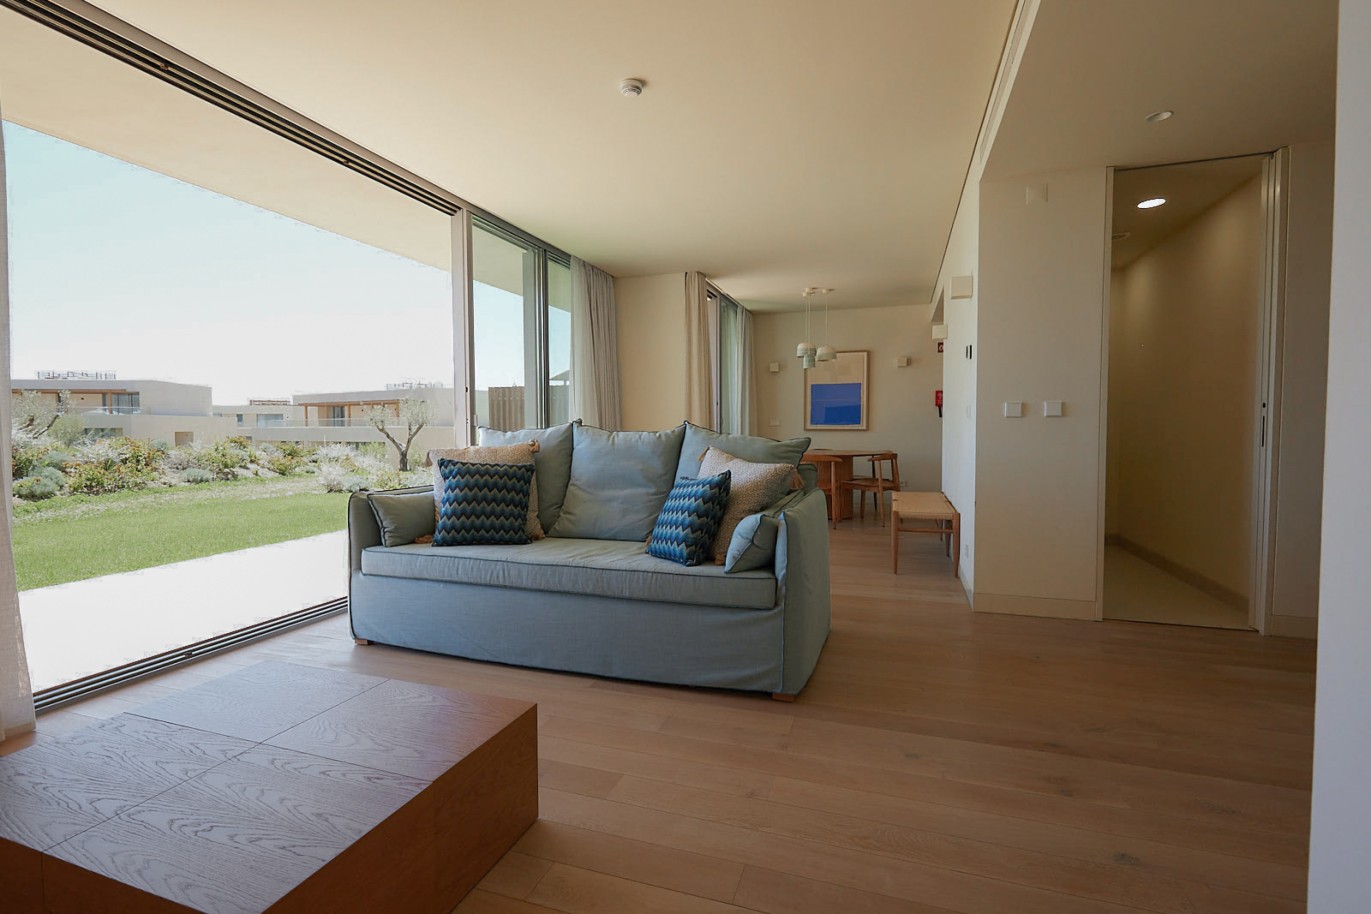 3 bedroom apartment in resort, for sale in Porches, Algarve_230732